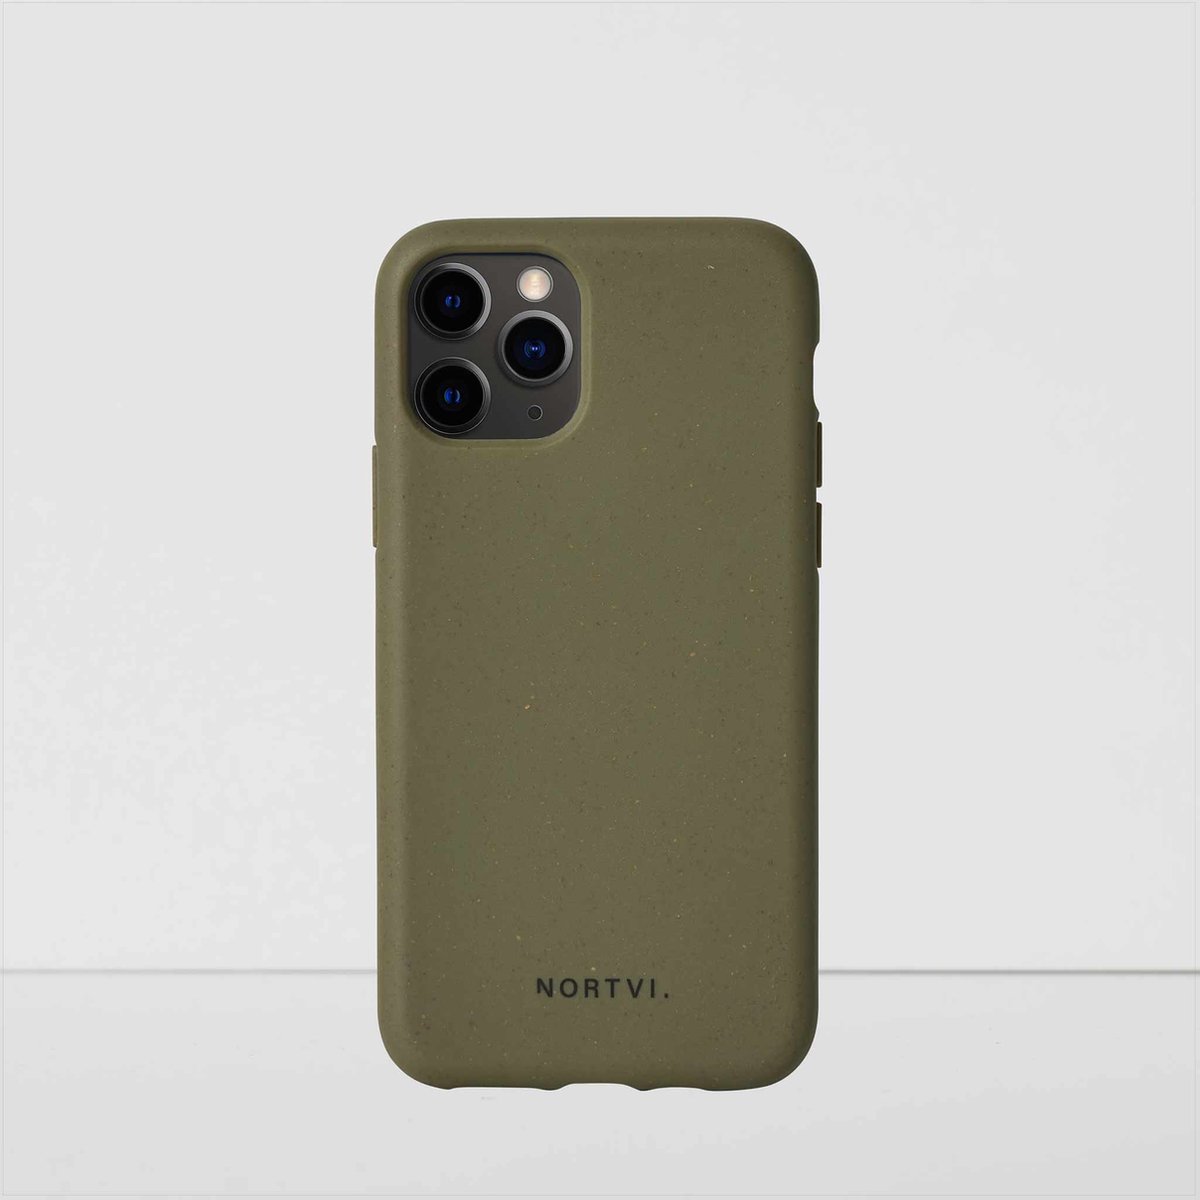 NORTVI iPhone 11 Pro Max hoesje | Donkergroen | Sterk, Duurzaam & Fashionable